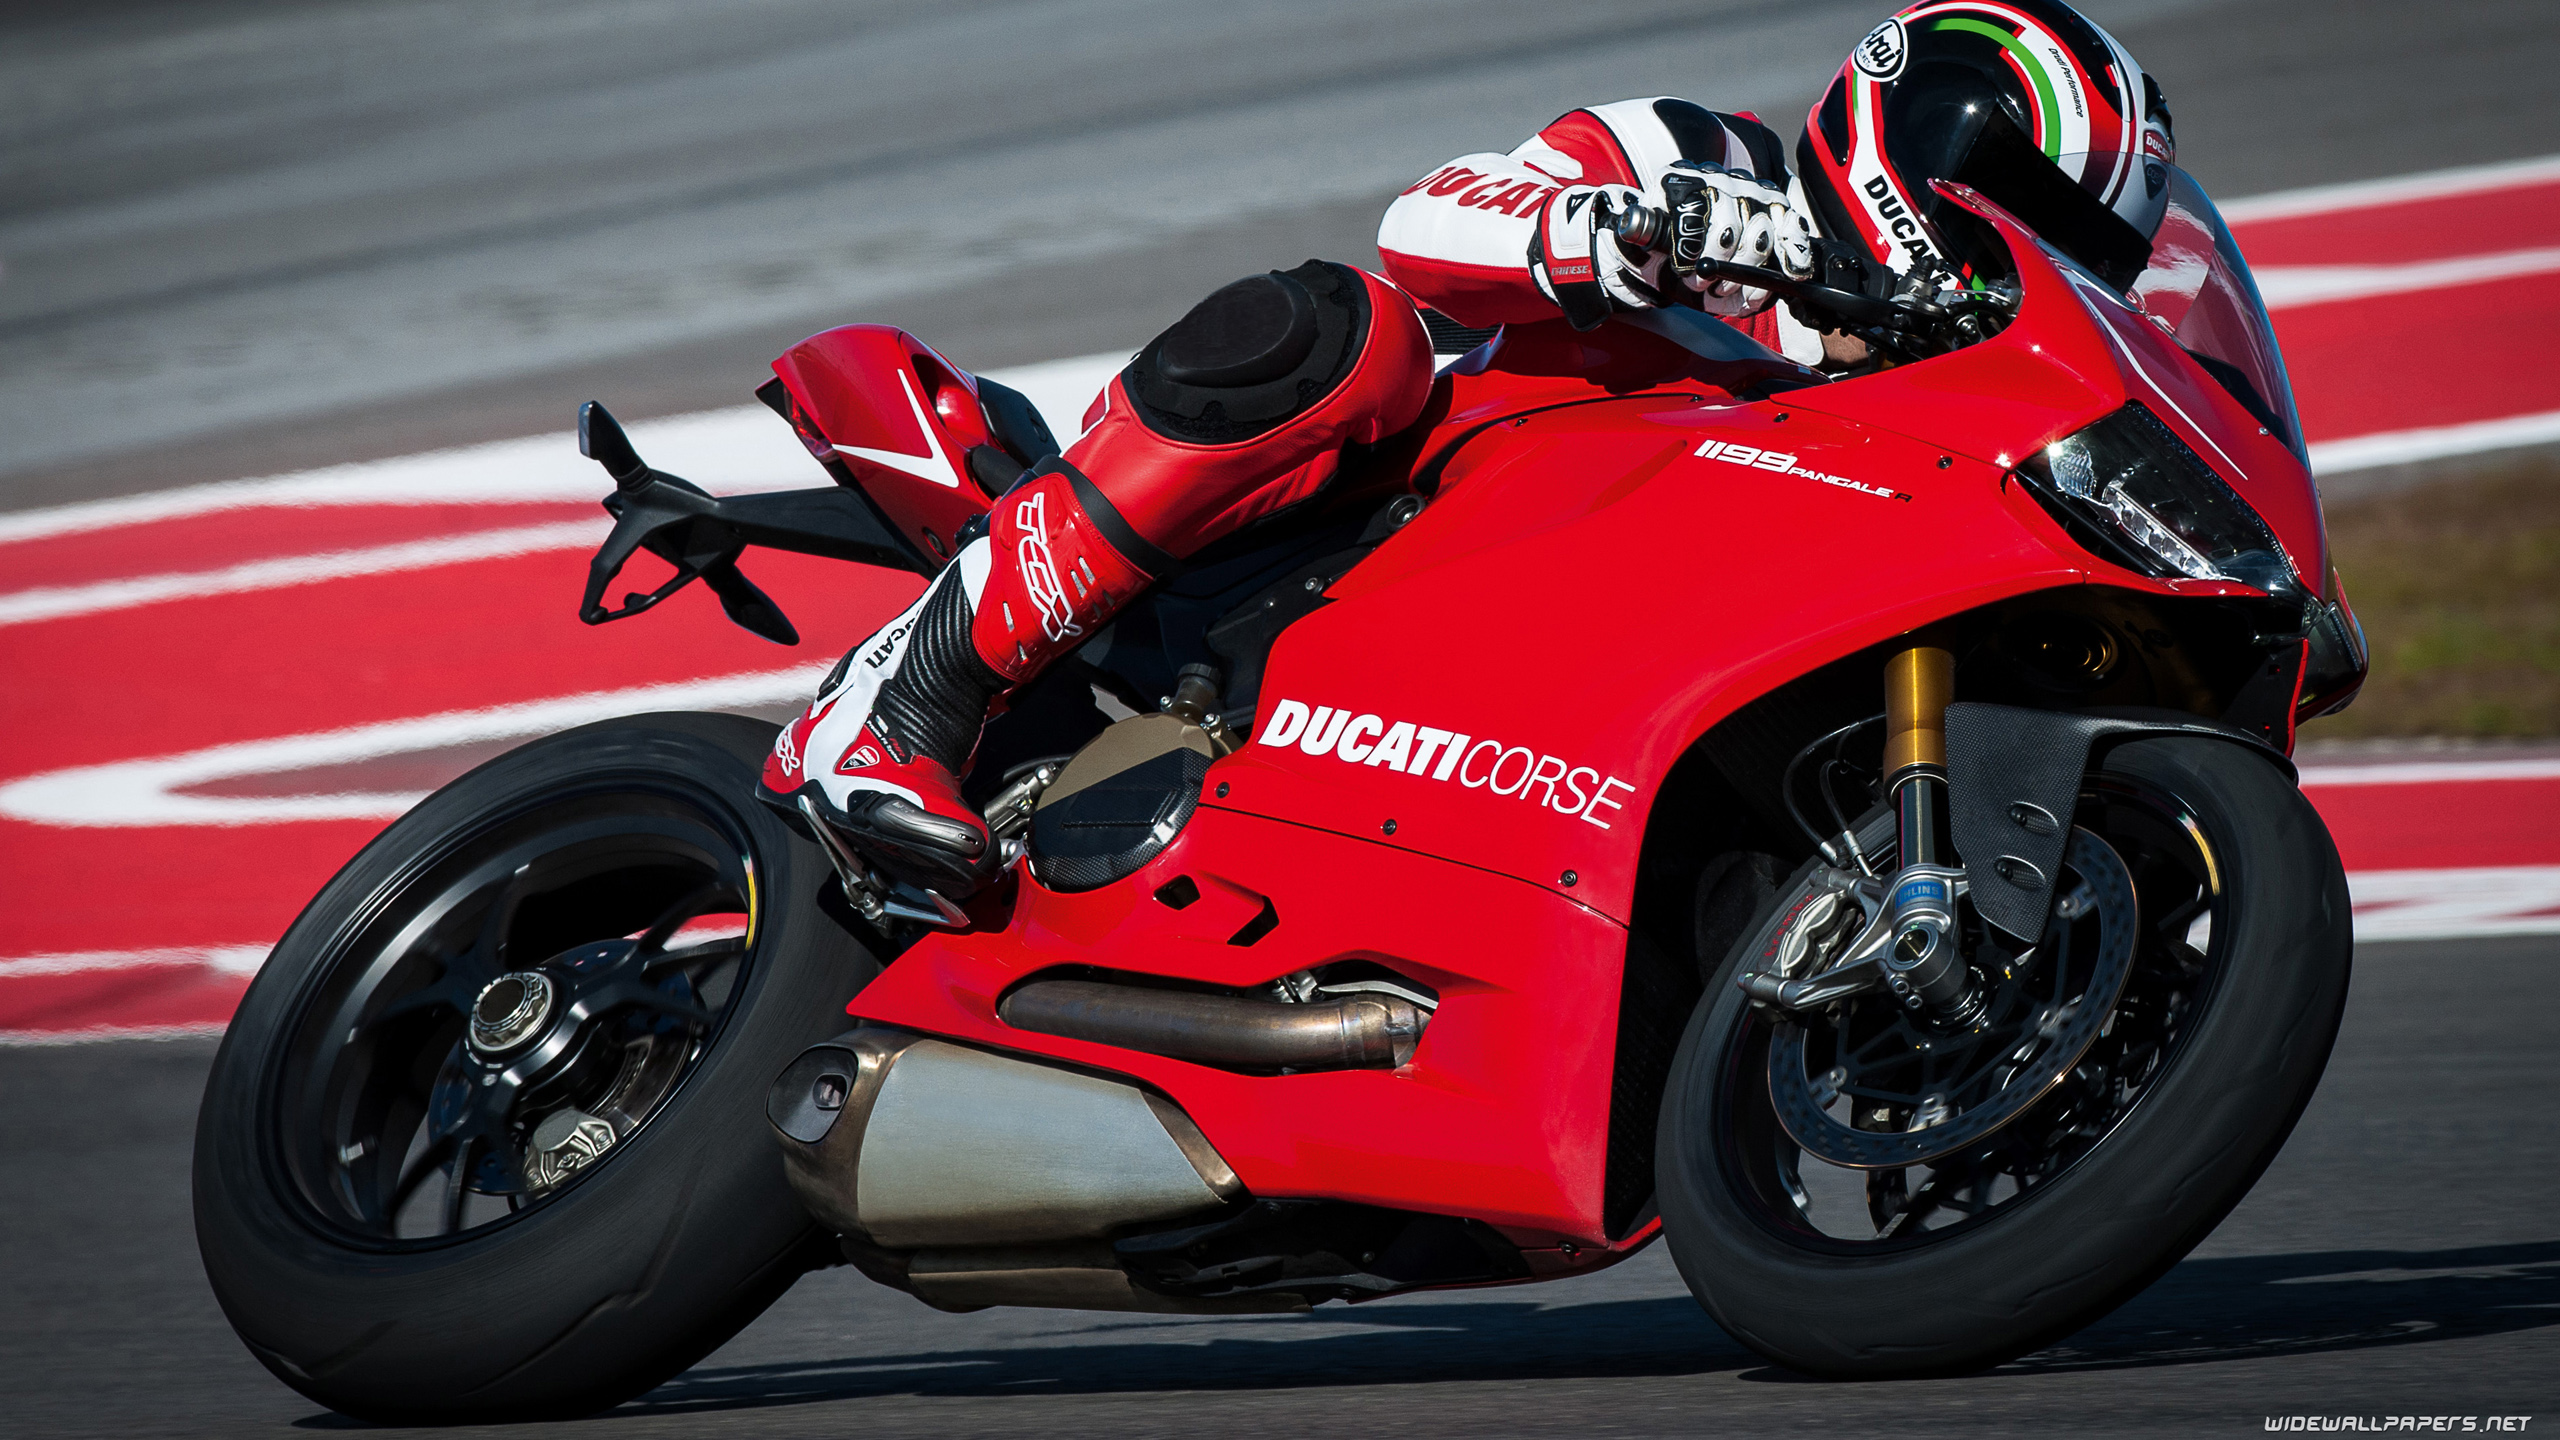 Ducati Superbike 1199 Panigale motorcycle desktop 2560x1440